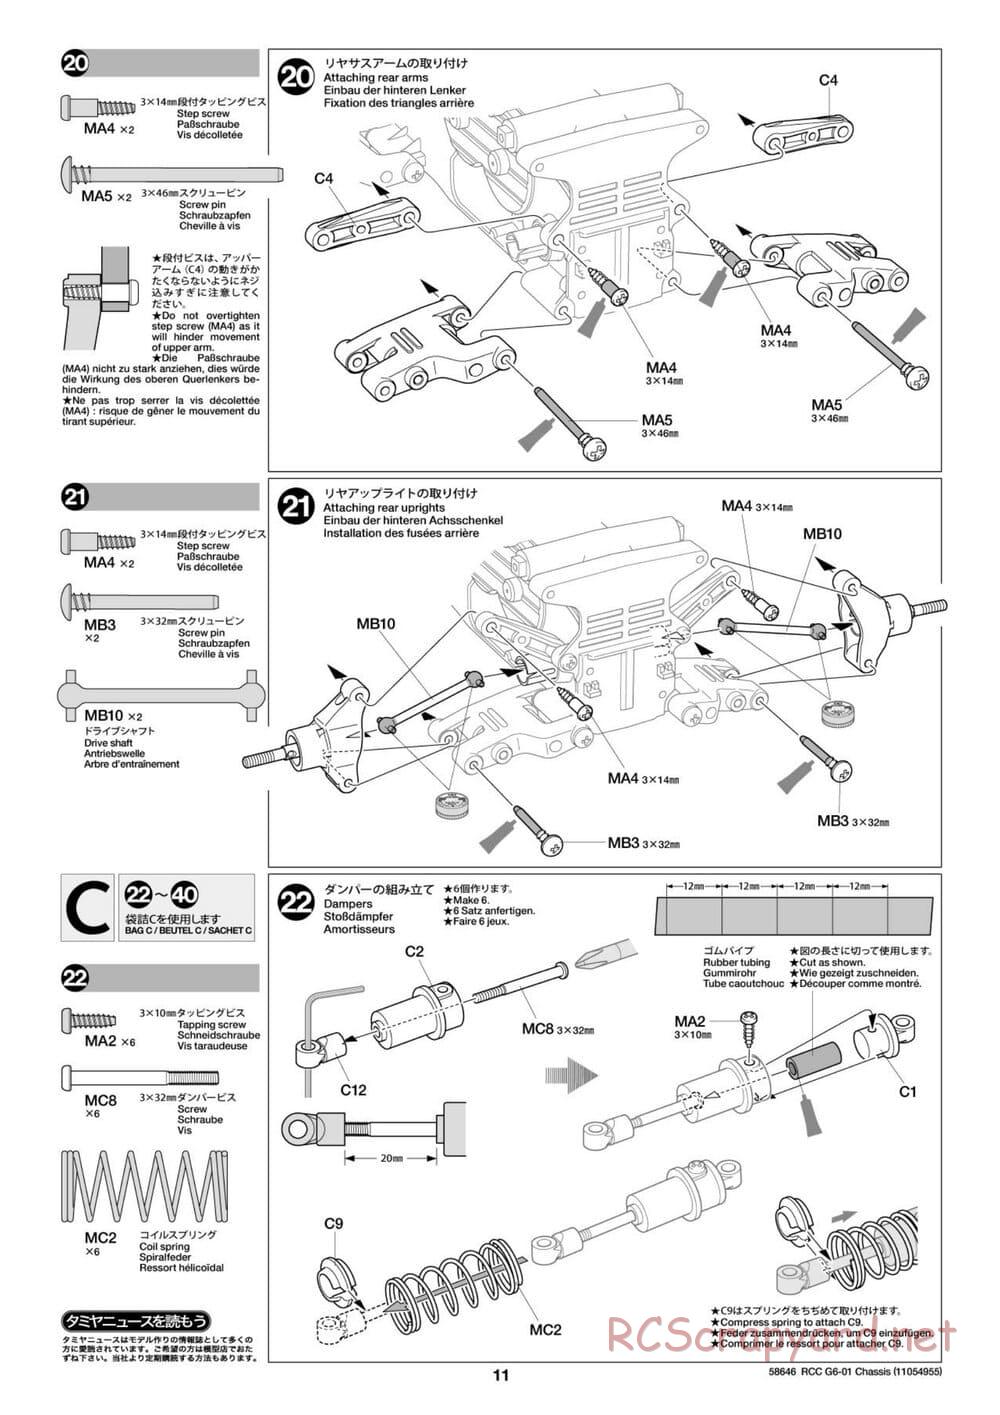 Tamiya - Konghead 6x6 - G6-01 Chassis - Manual - Page 11